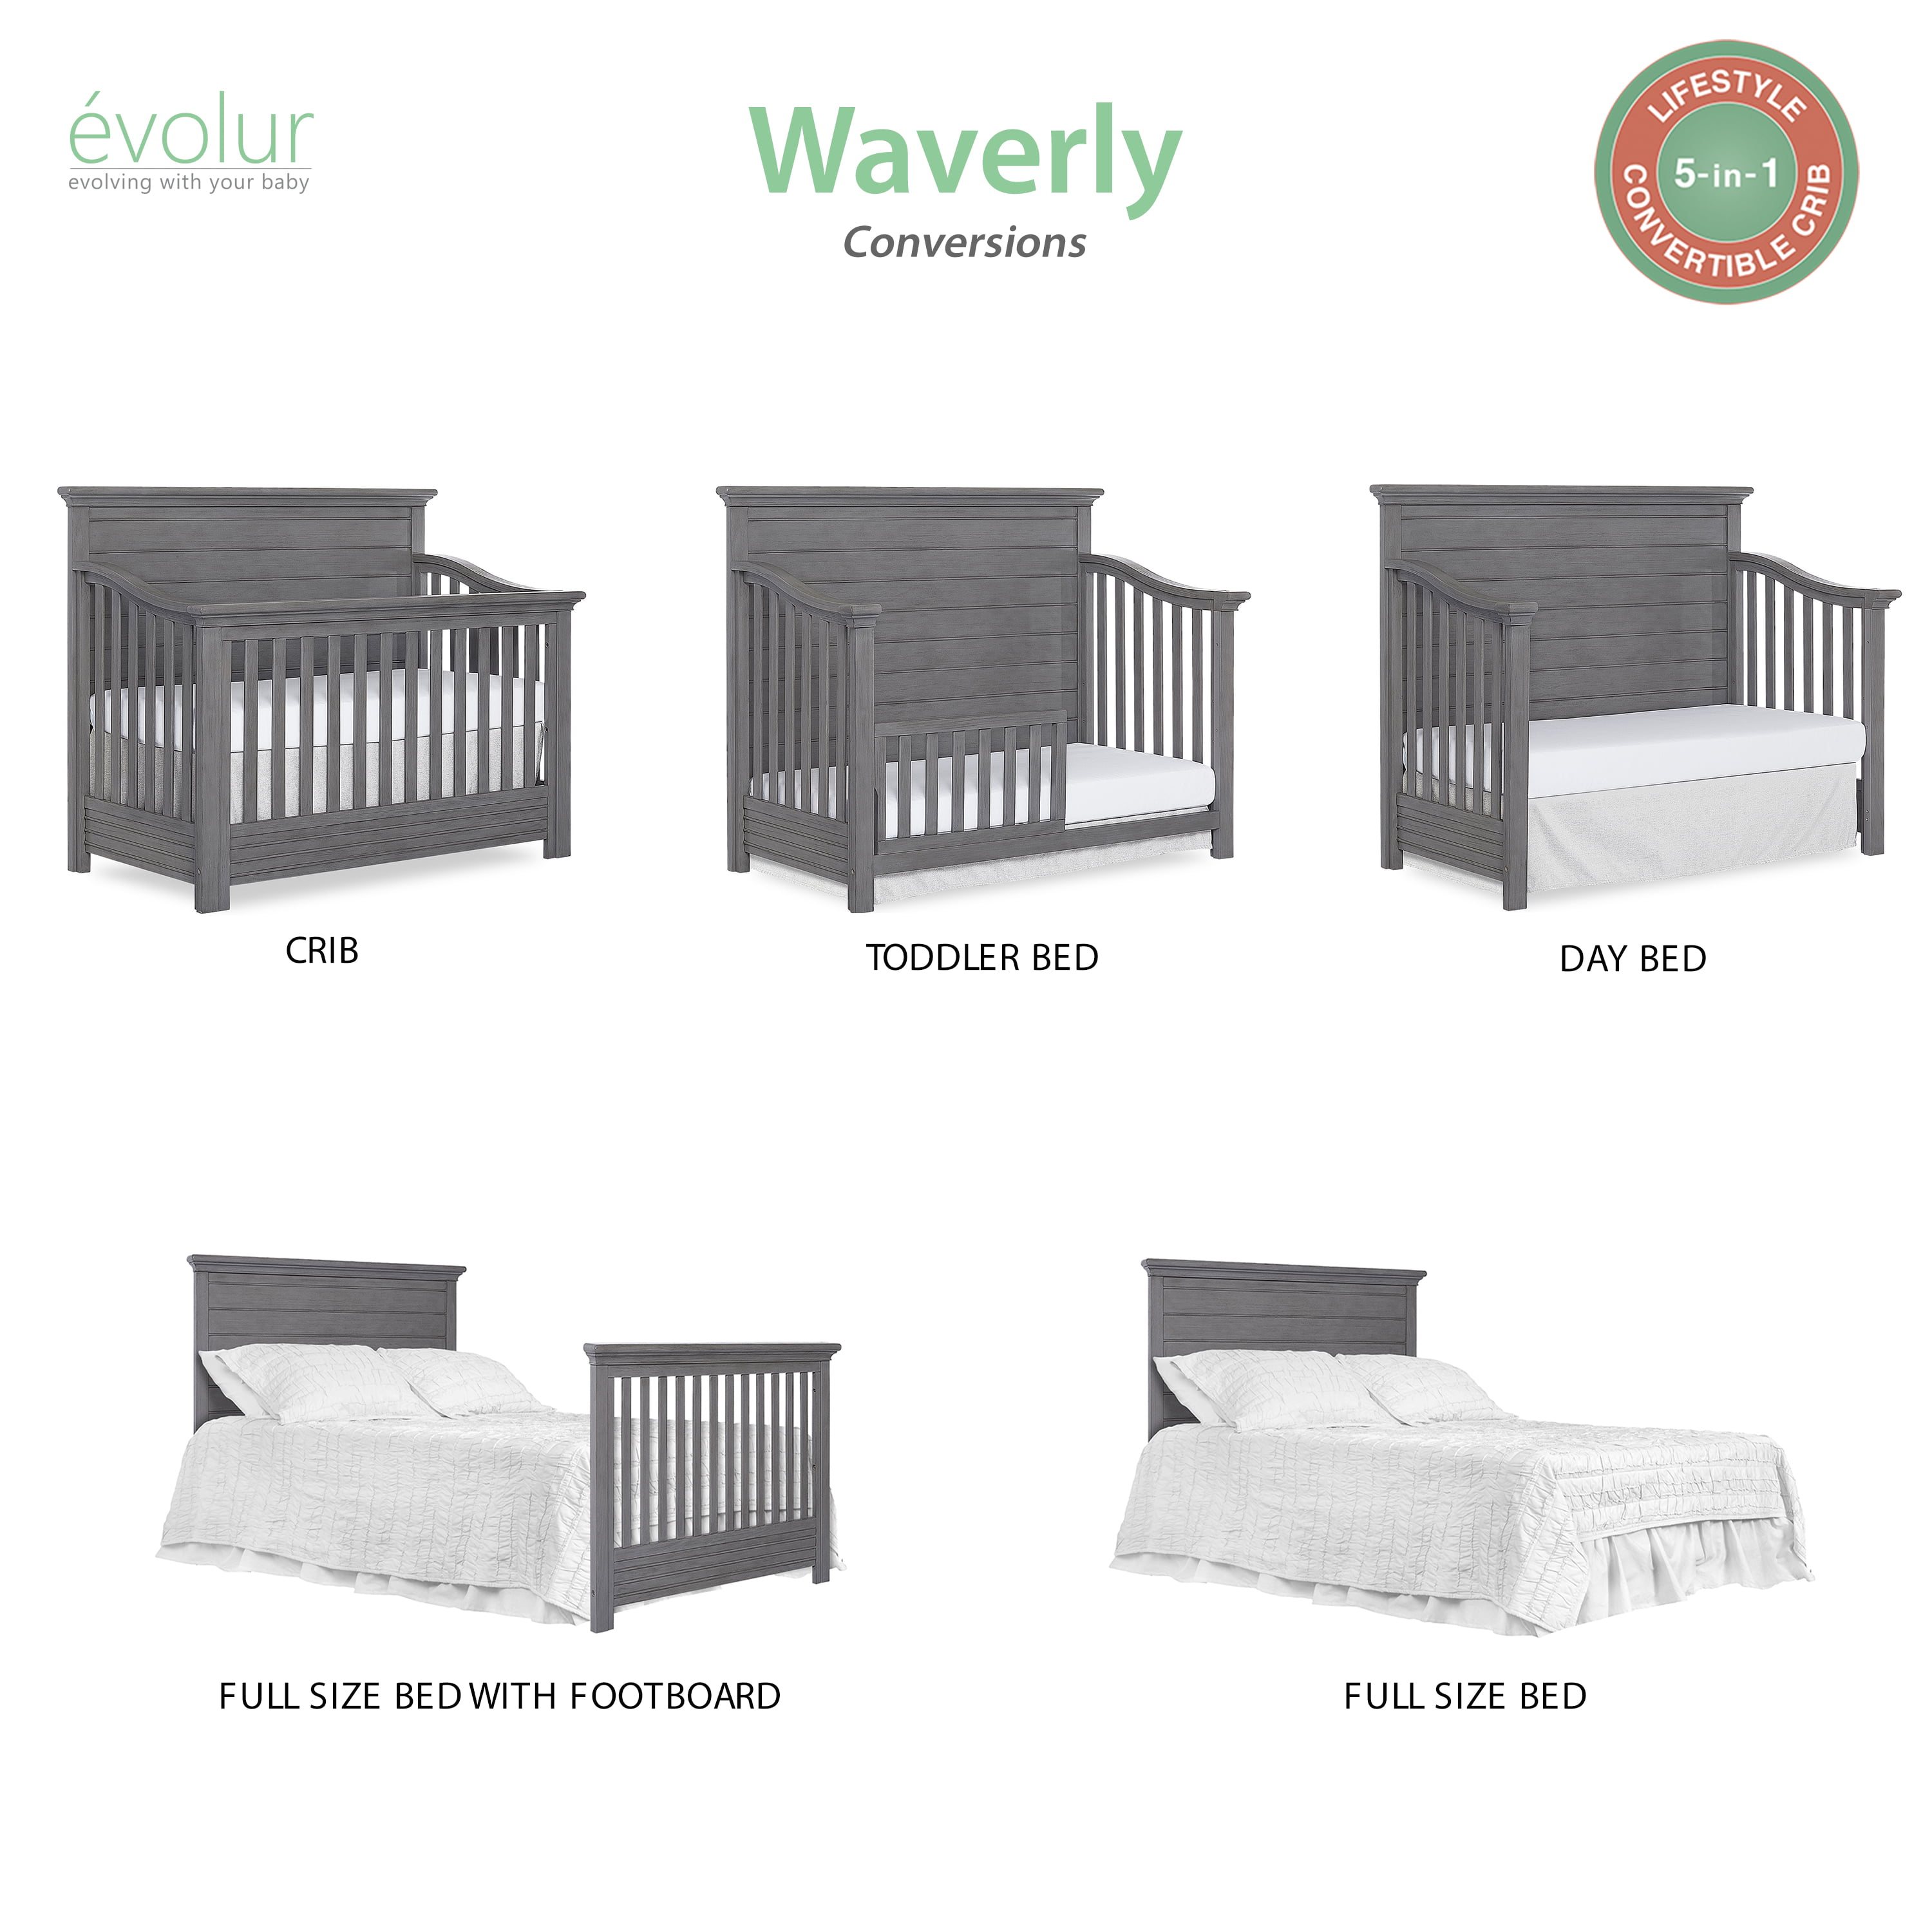 evolur waverly crib